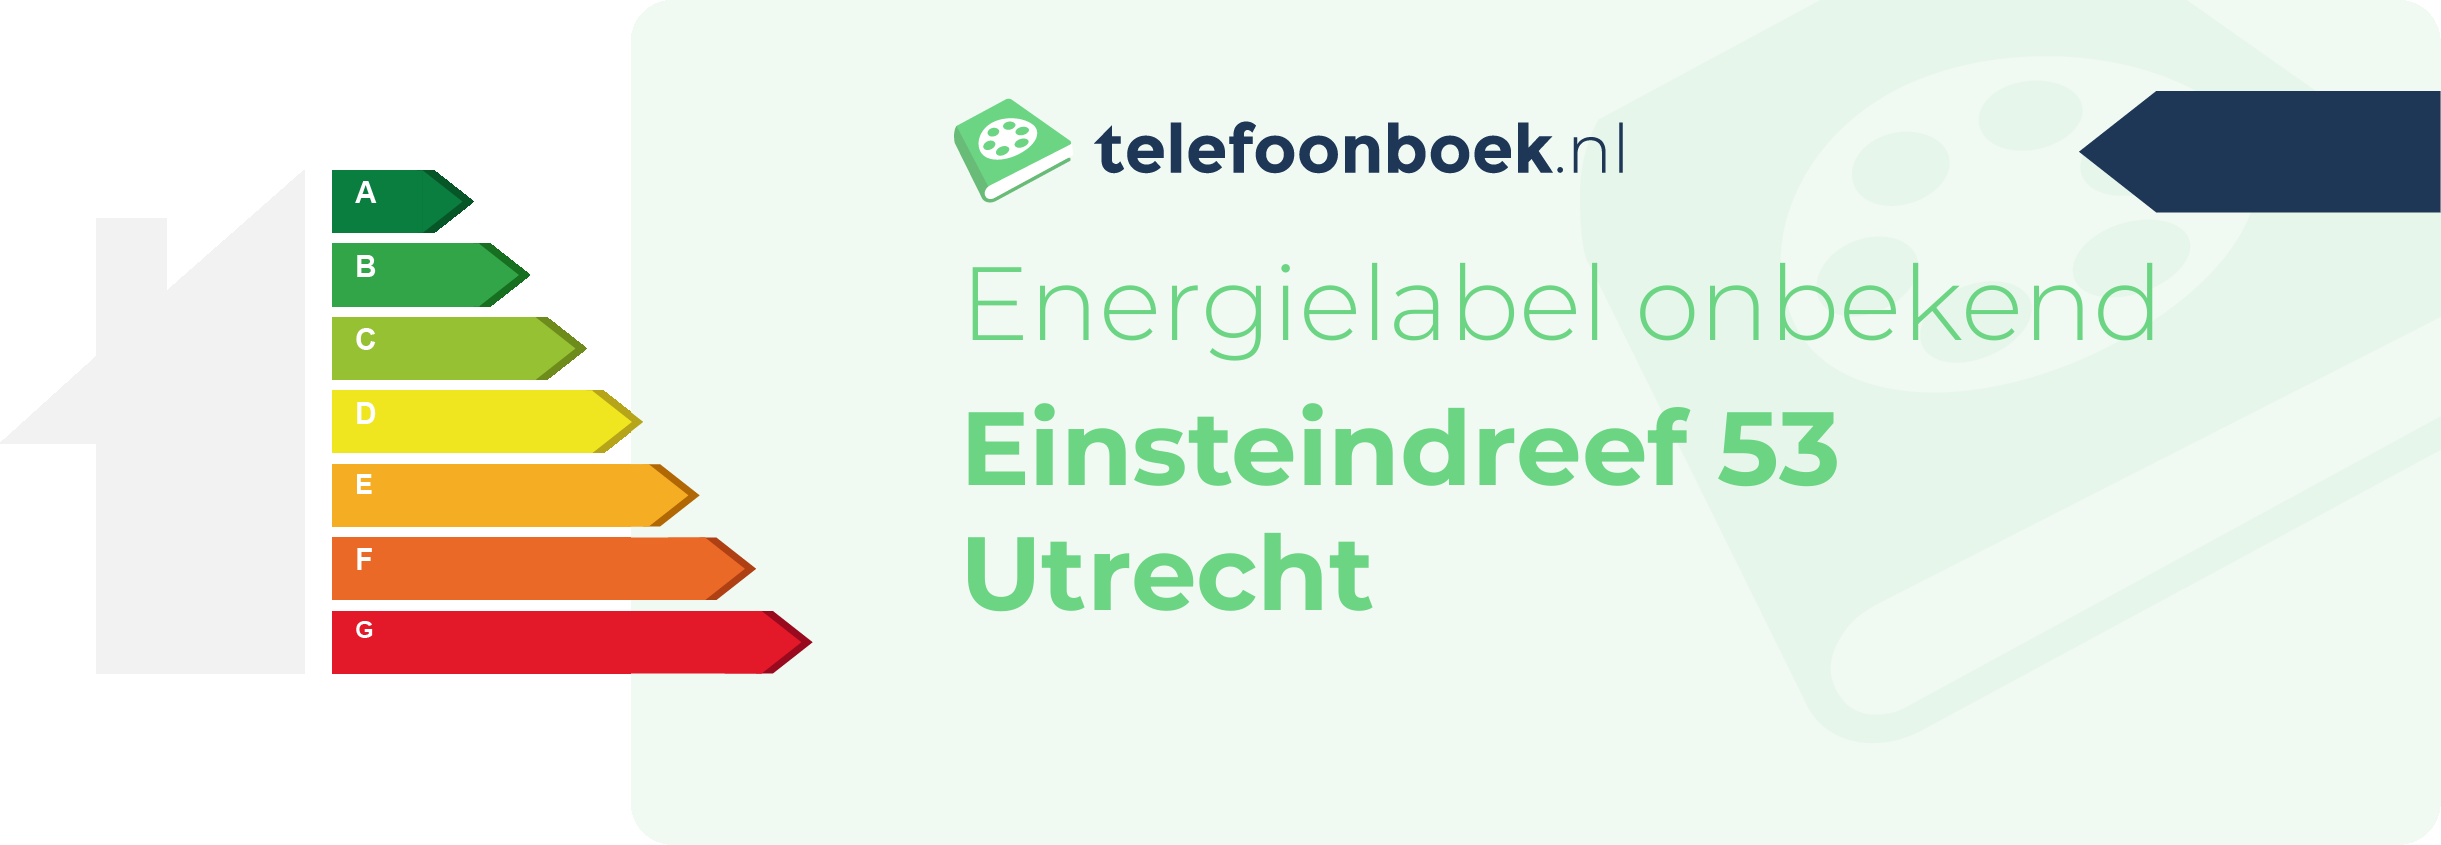 Energielabel Einsteindreef 53 Utrecht